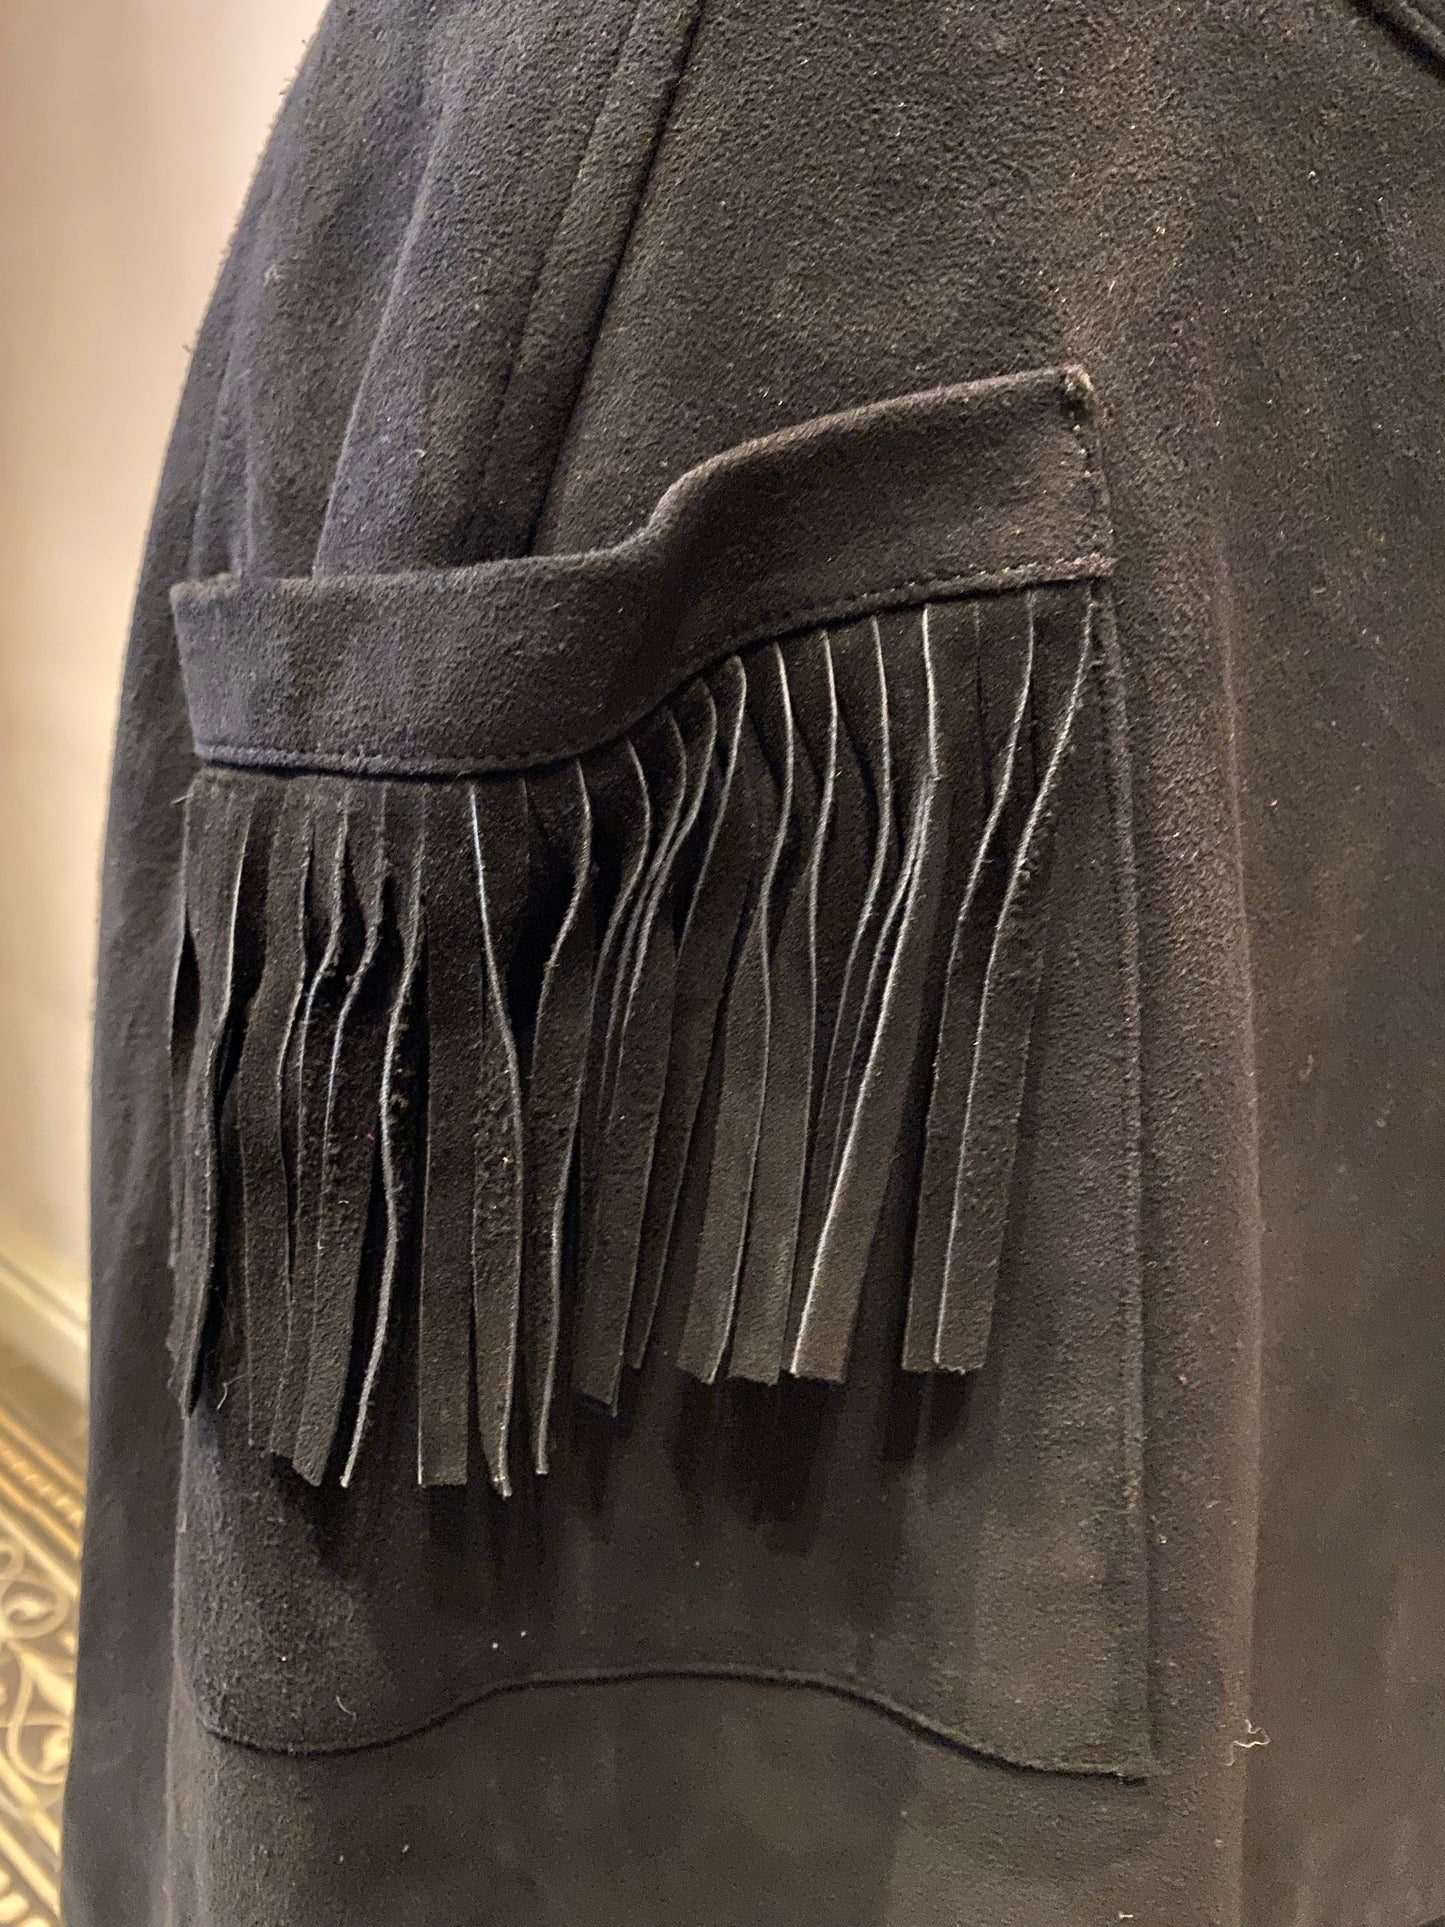 Lysis vintage Saint Laurent fringed suede skirt - M - 2000s